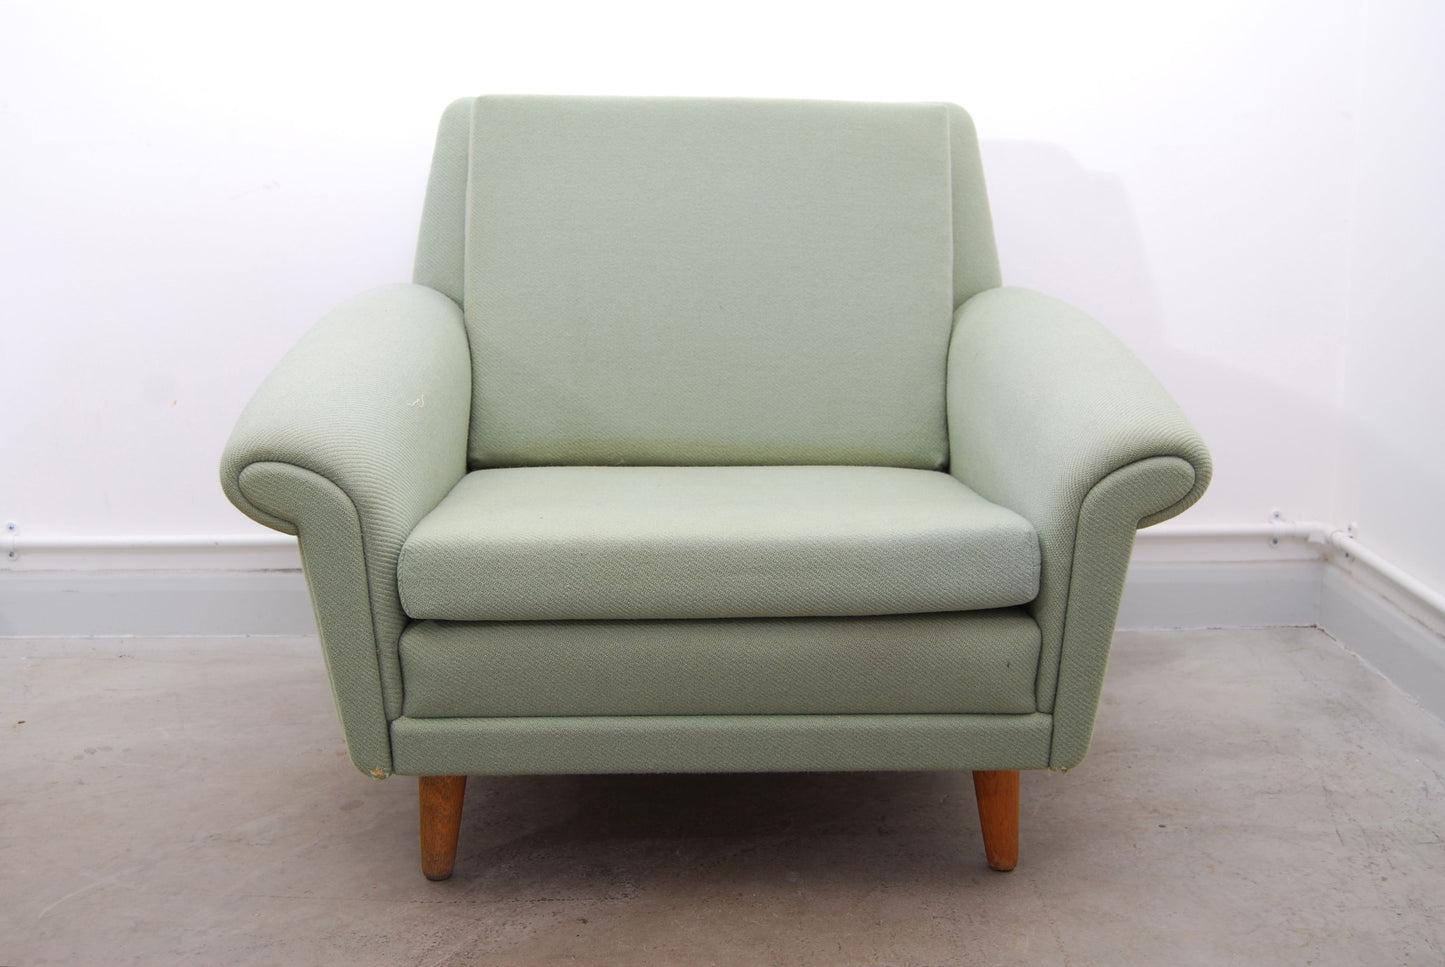 Mint green lounge chair